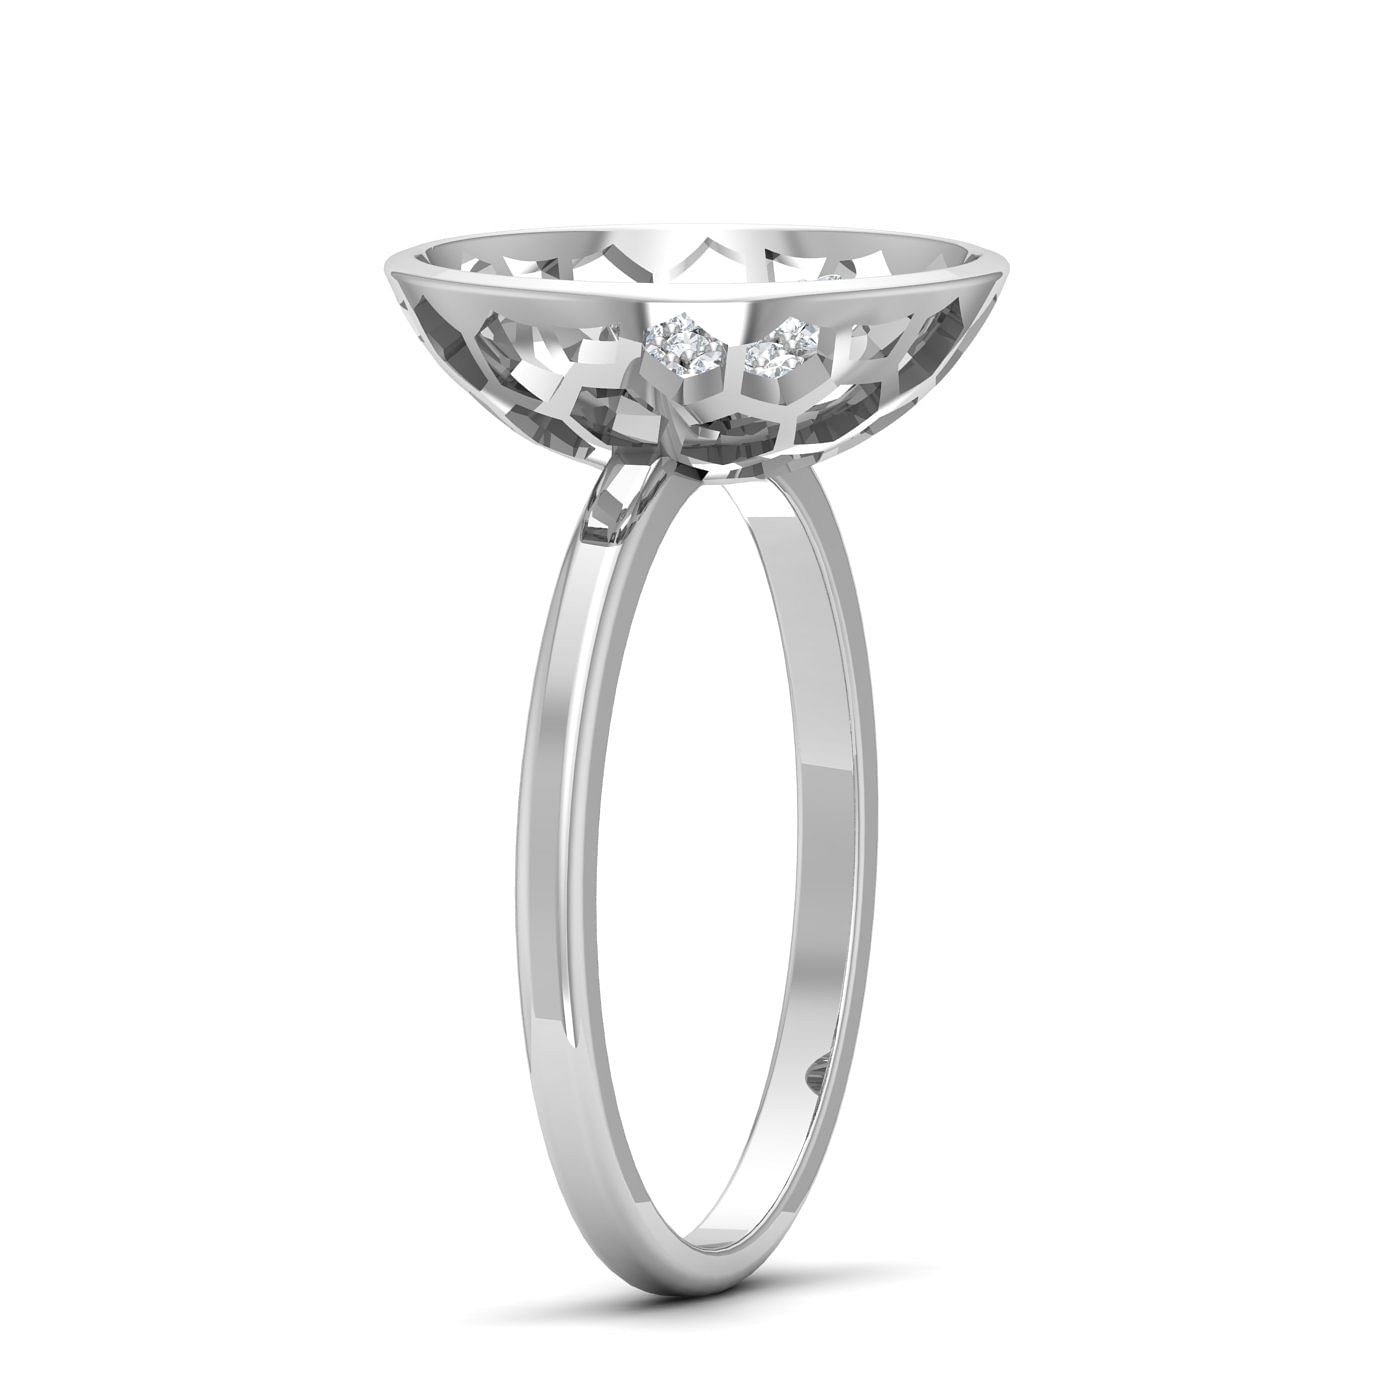 Heart Shape Design Diamond Ring With White Gold For Women